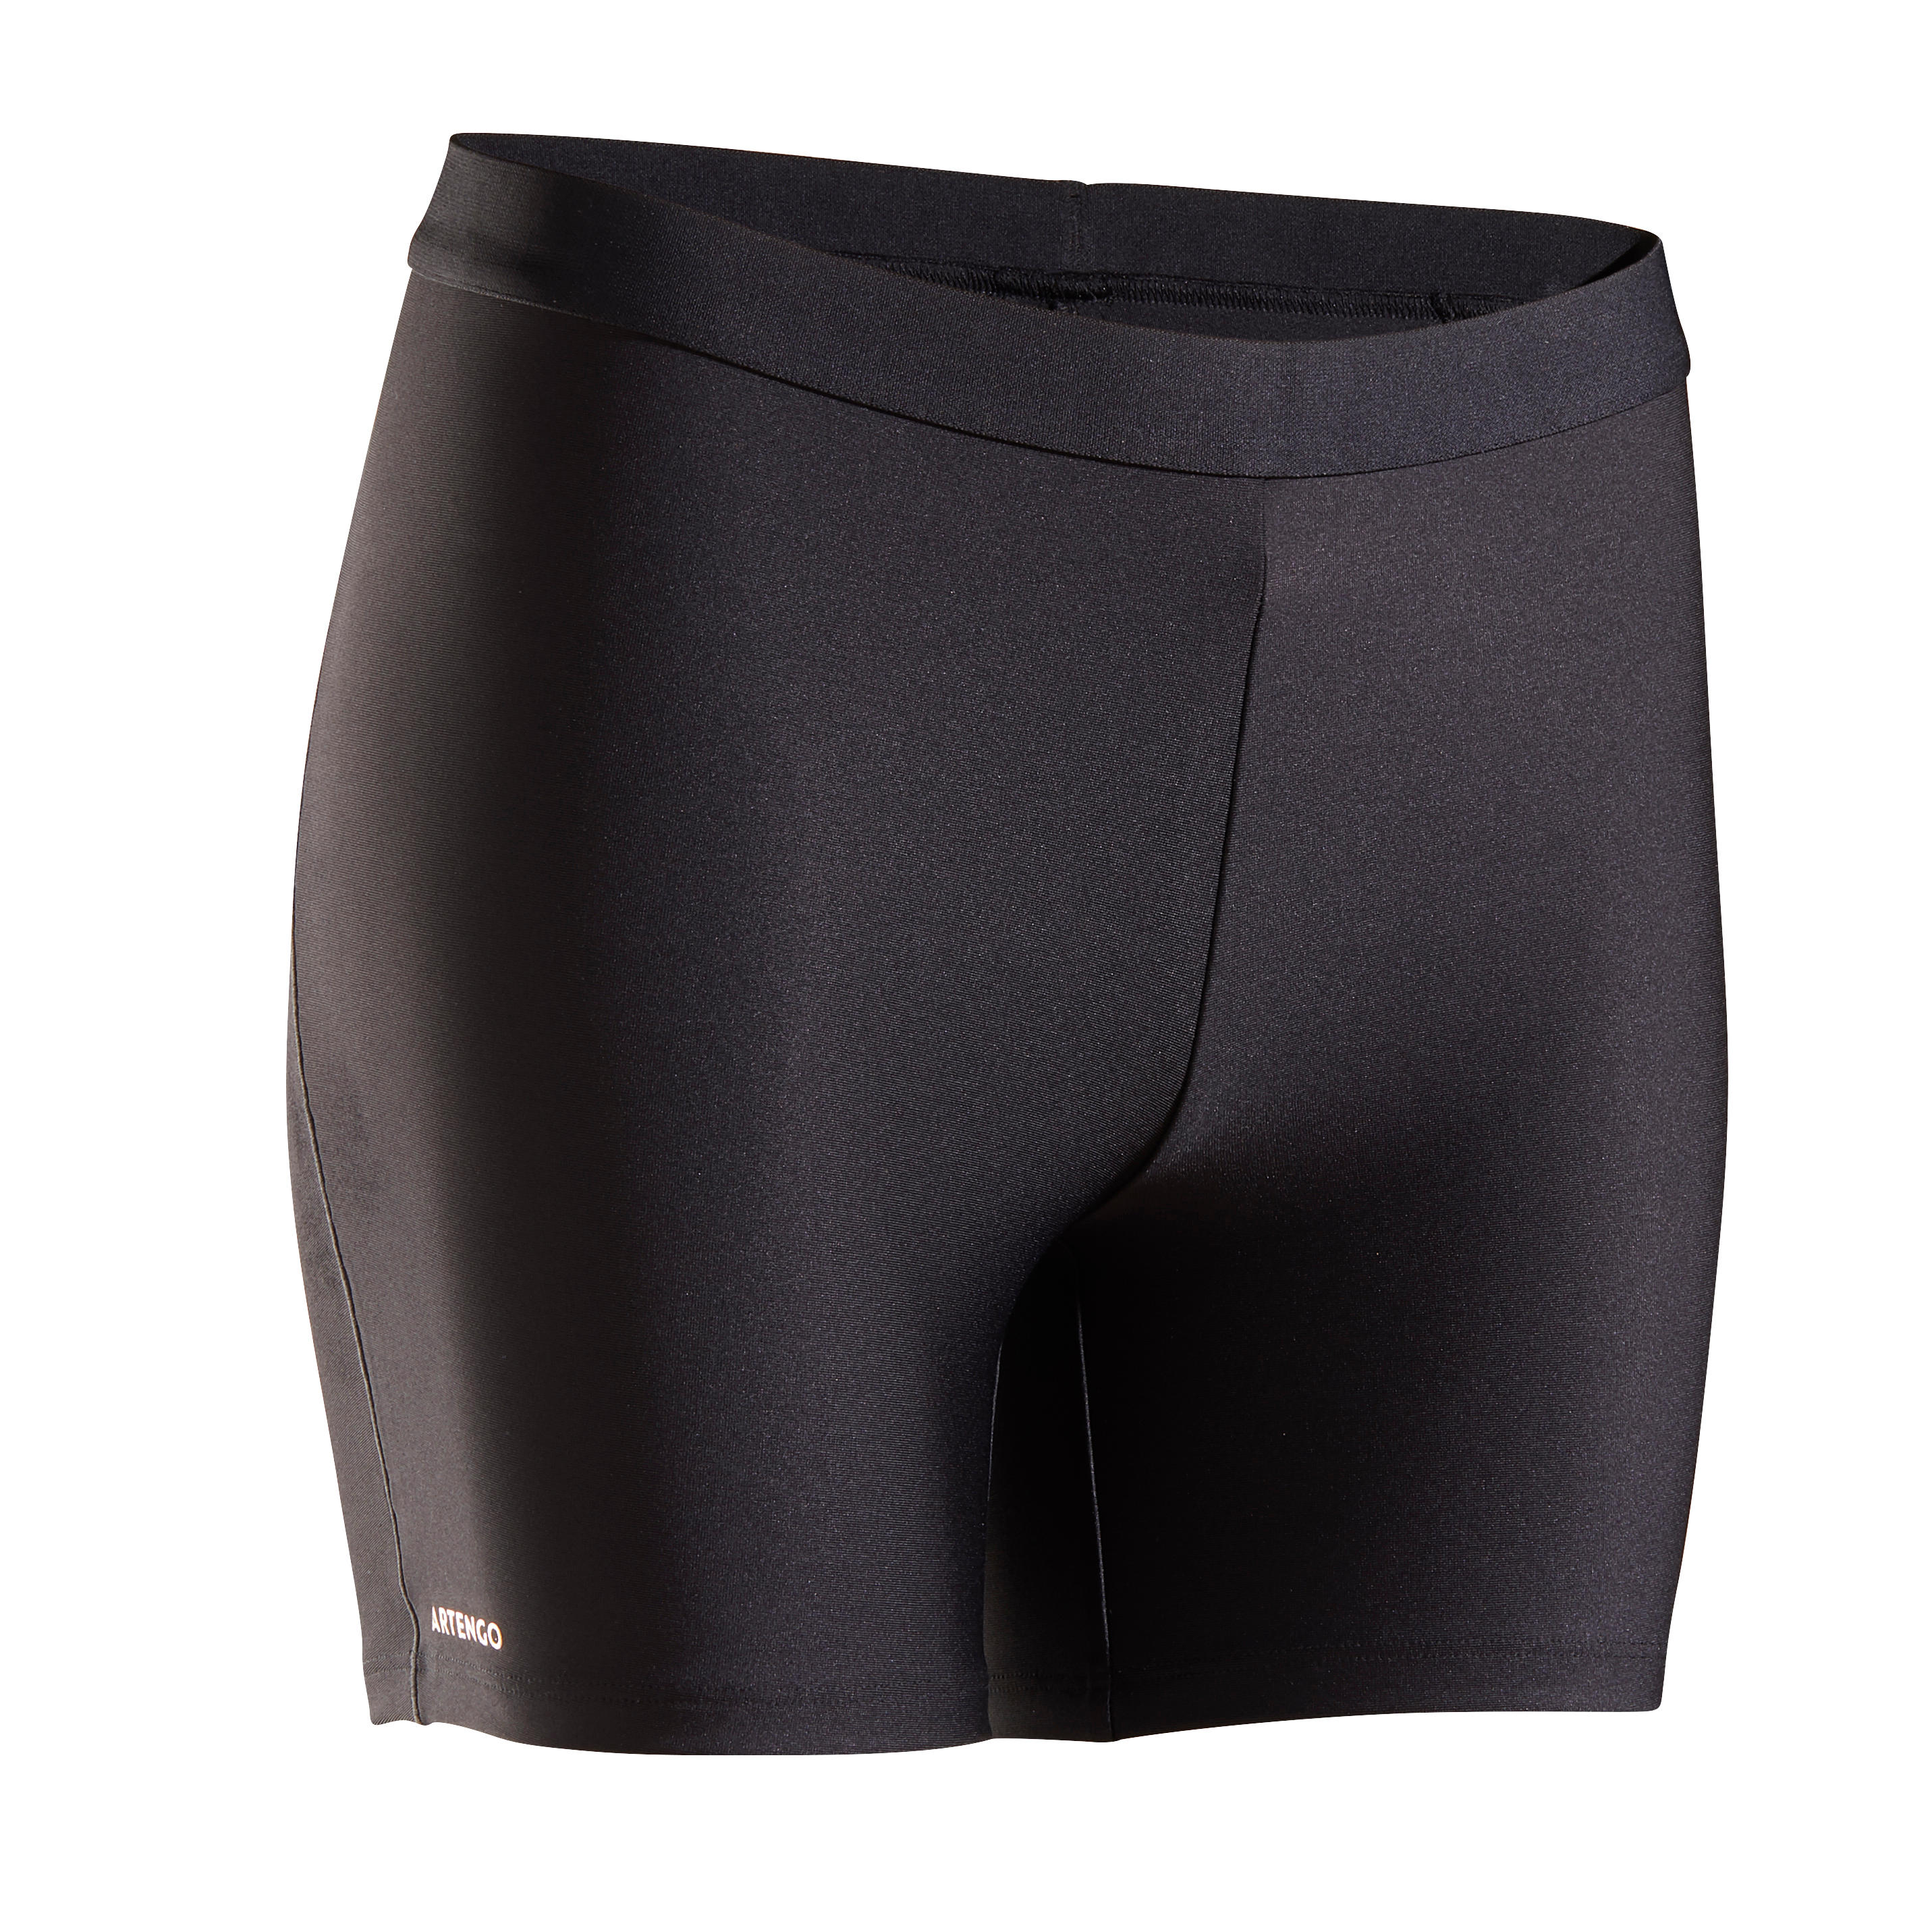 Women's Tennis Quick-Dry Shorts Dry 900 - Black 4/5